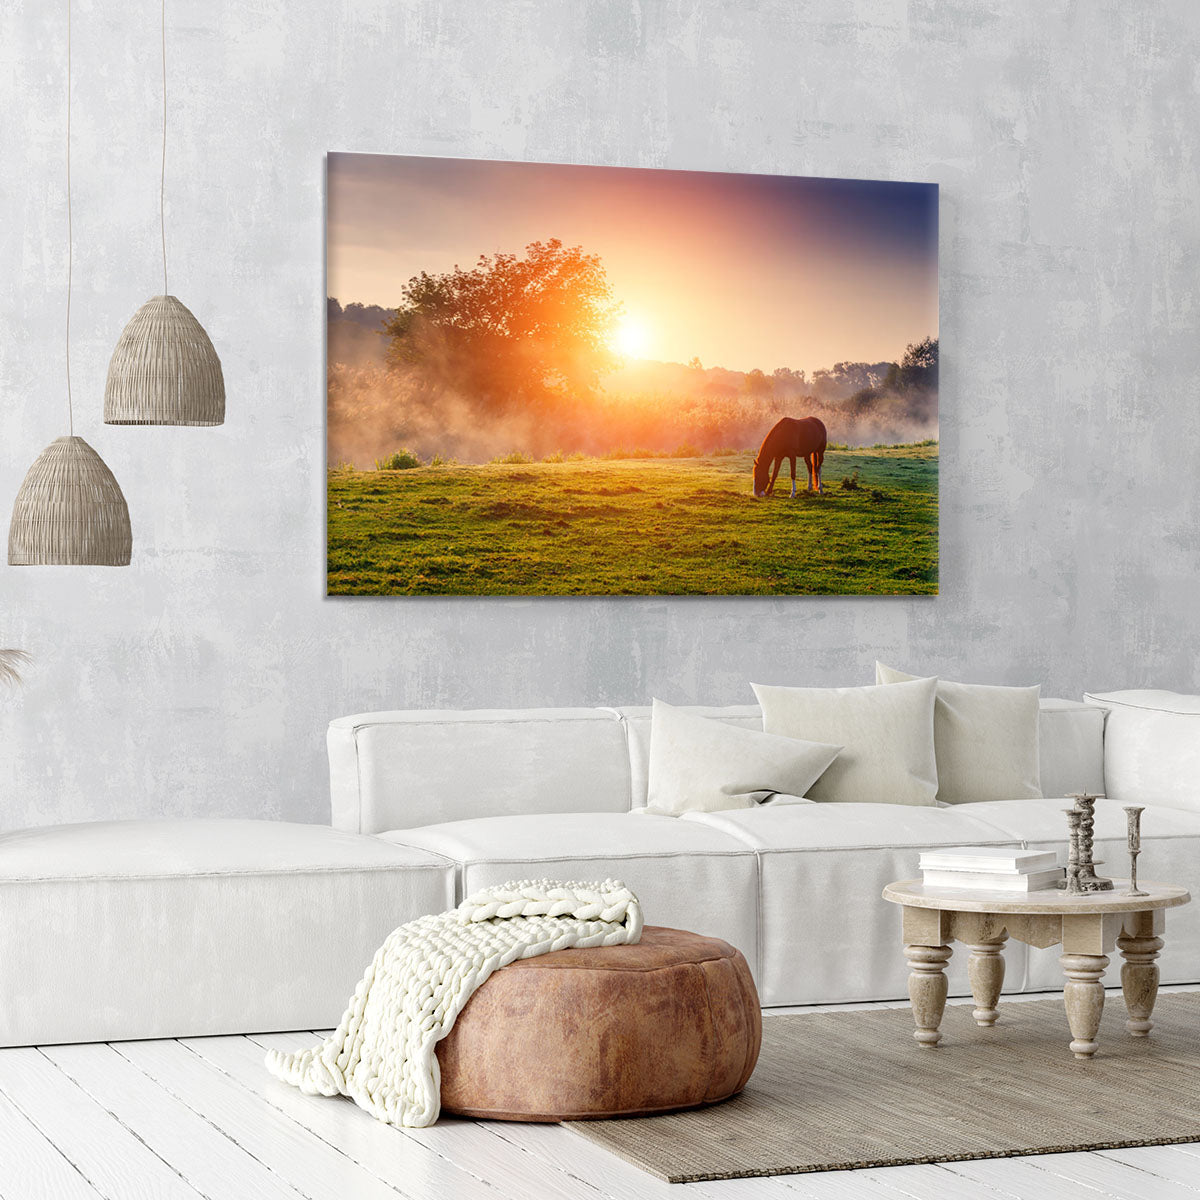 Arabian horses grazing on pasture at sundown in orange sunny beams Canvas Print or Poster - Canvas Art Rocks - 6